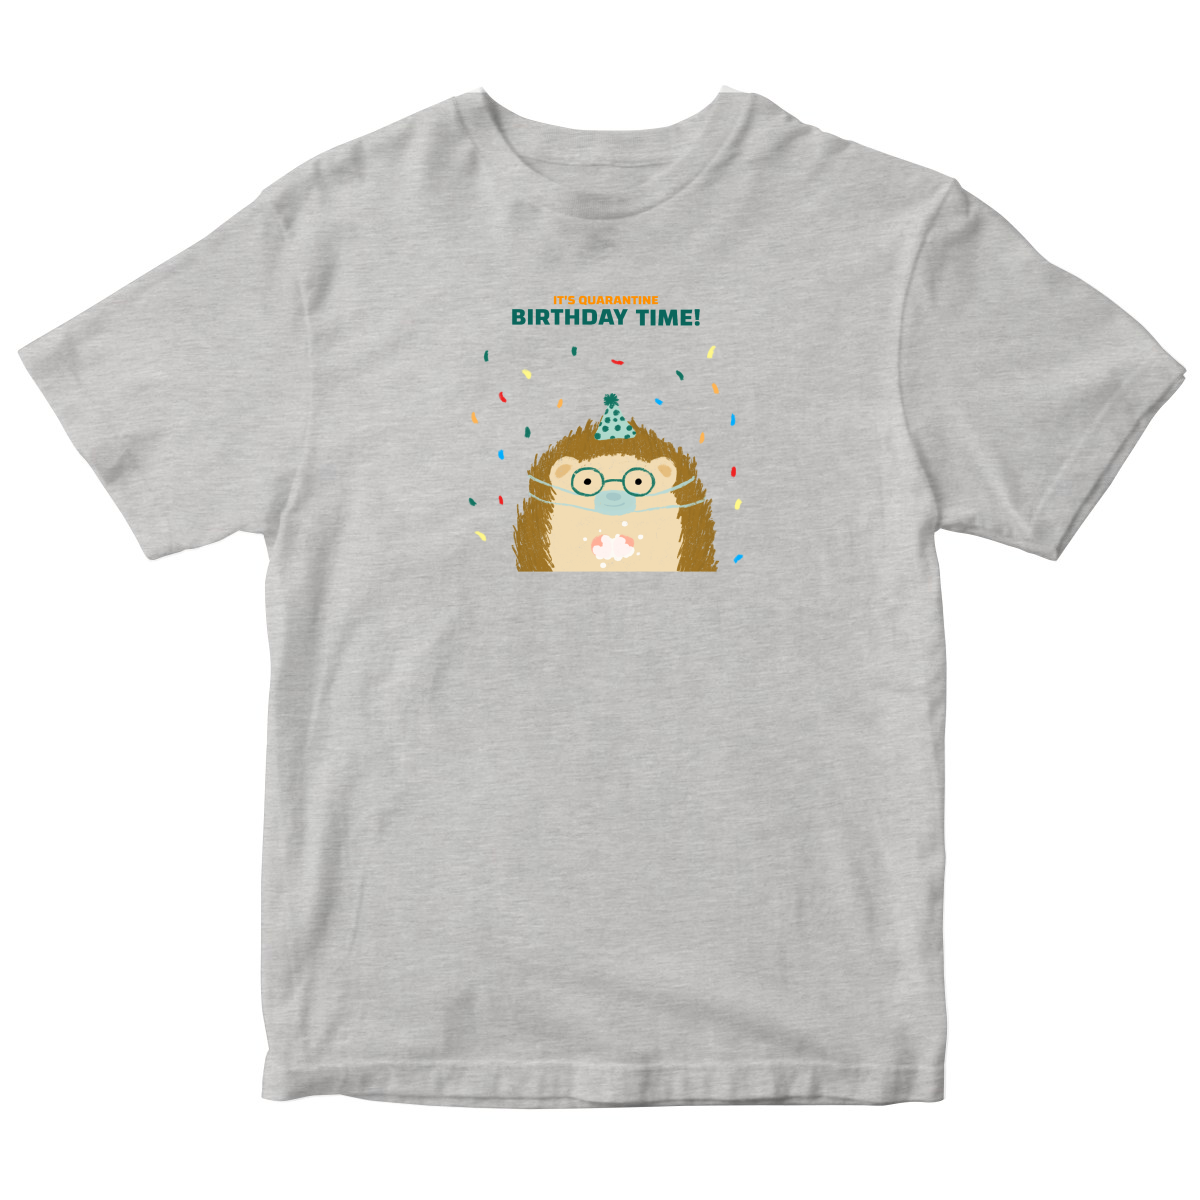 It is quarantine birthday time Toddler T-shirt | Gray